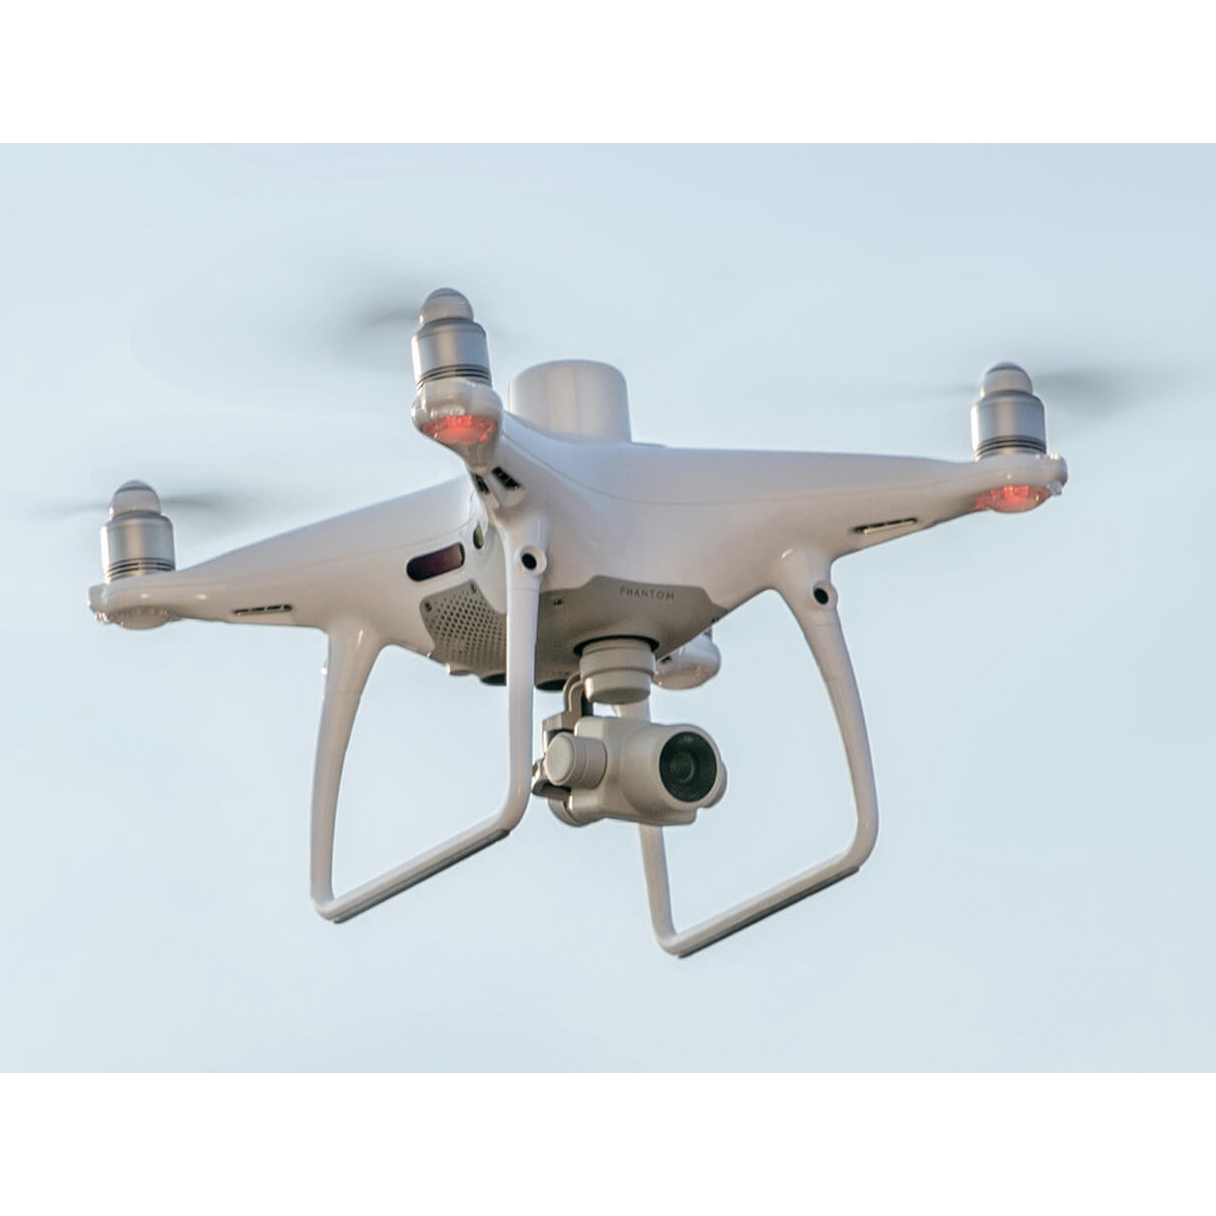 DJI Phantom 4 RTK – RMUS - Unmanned Solutions™ - Drone Robotics Sales, Training and Support